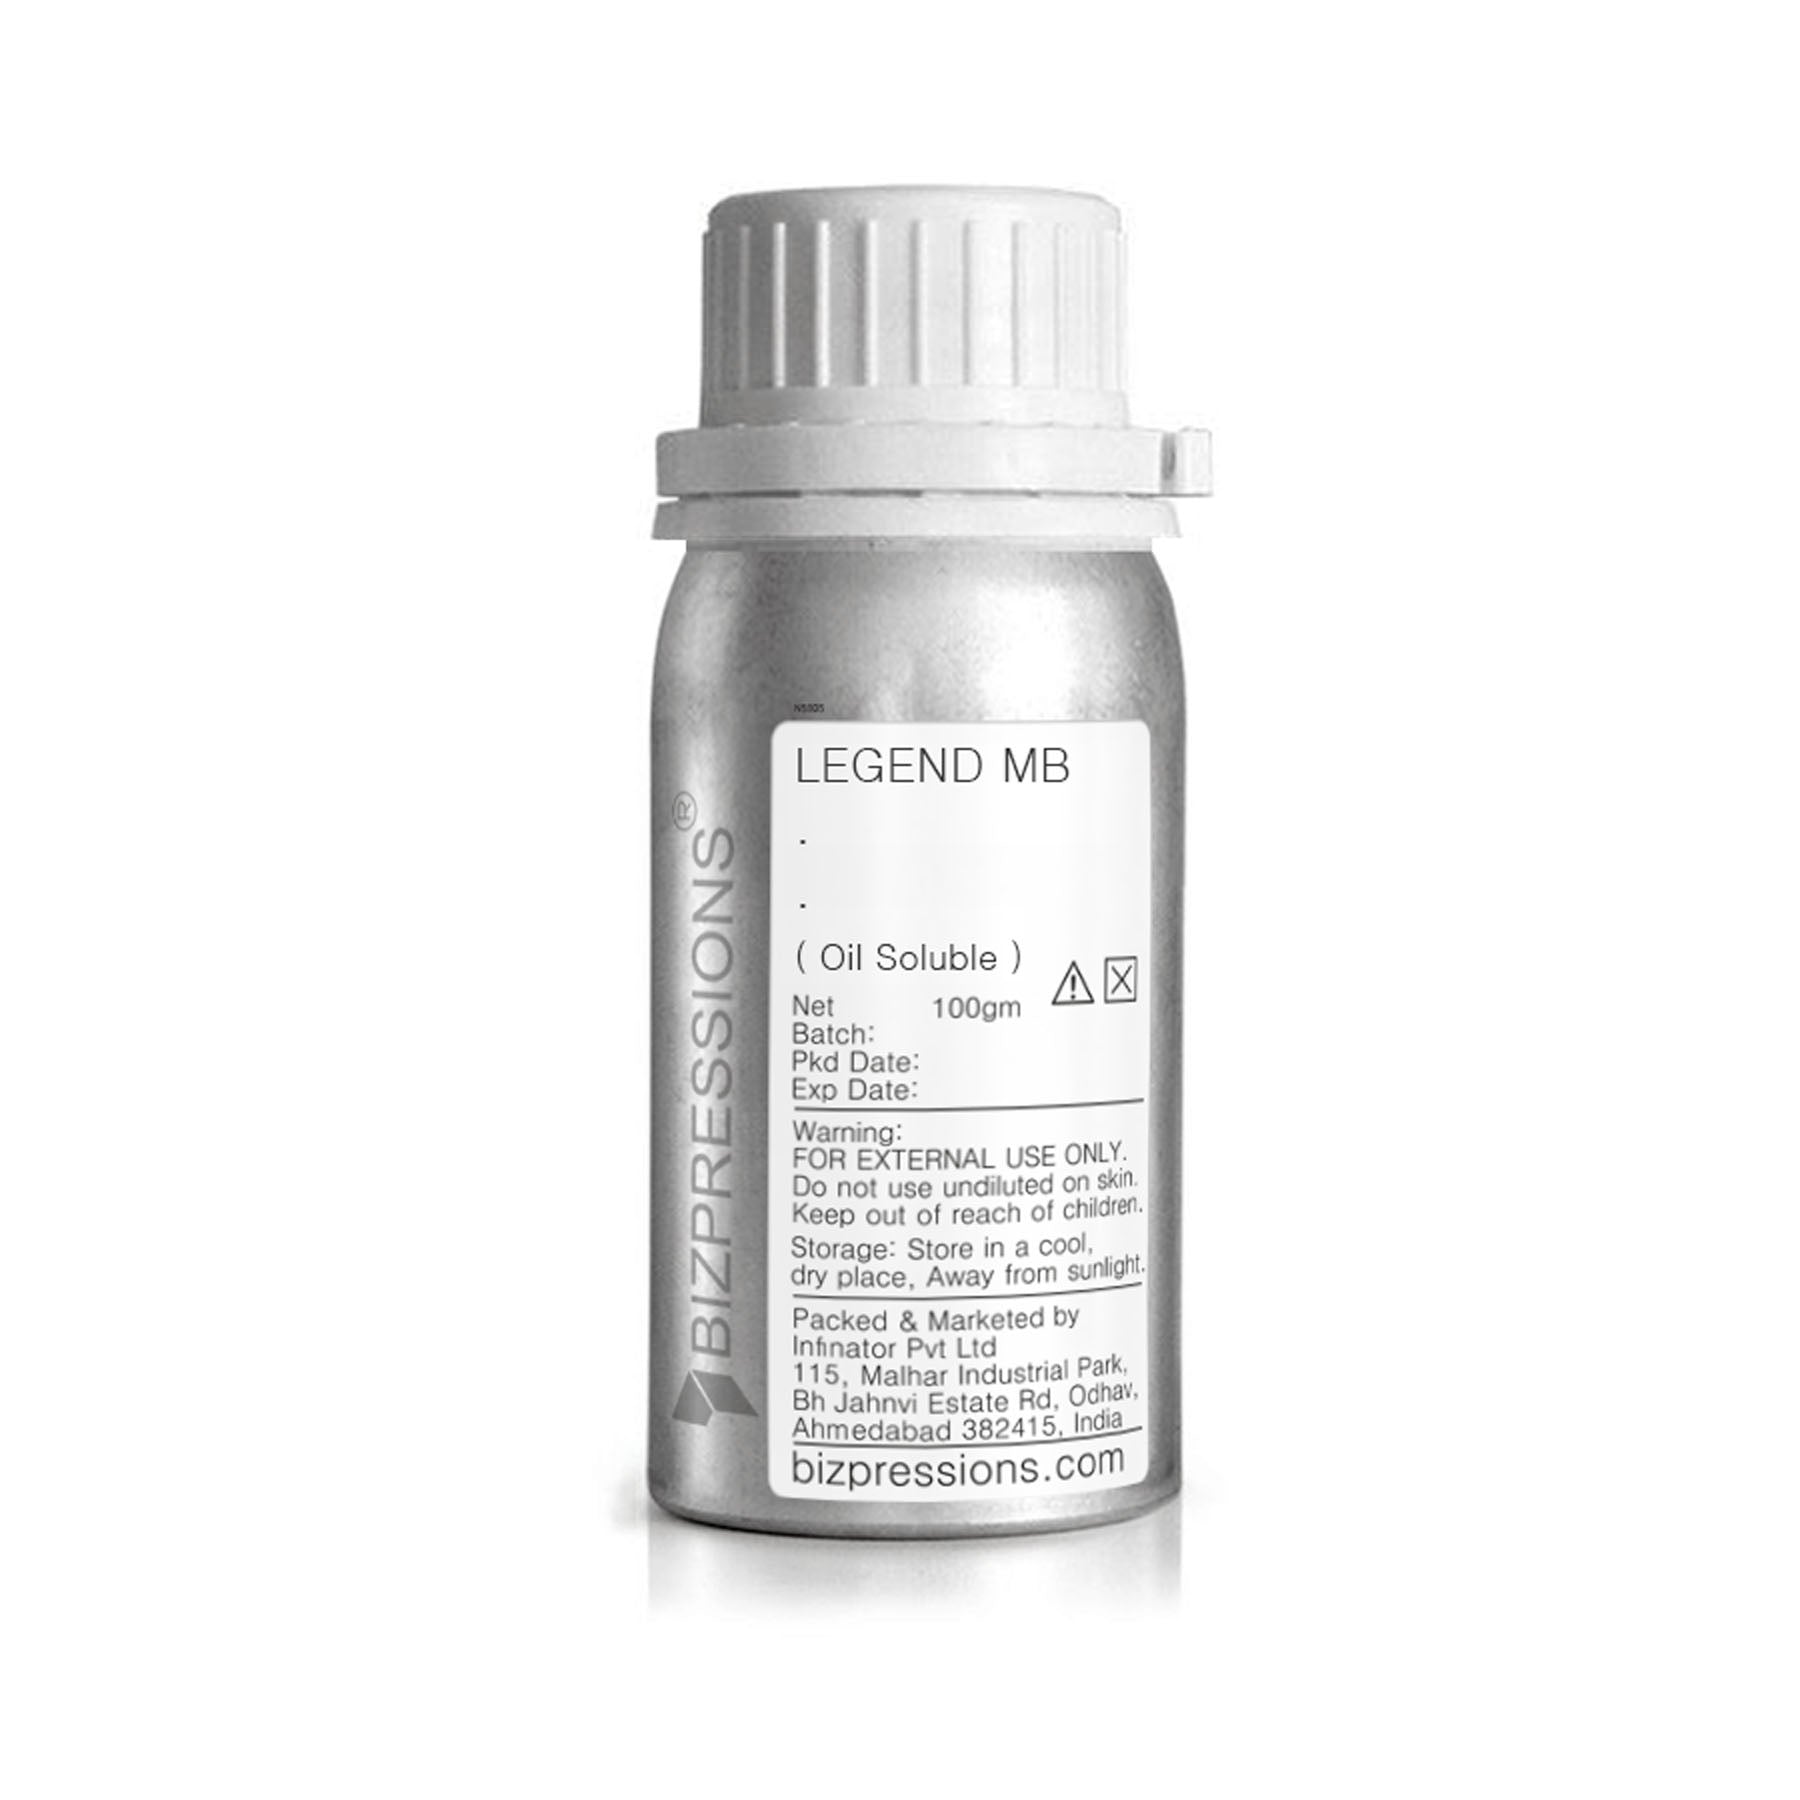 LEGEND MB - Fragrance ( Oil Soluble ) - 100 gm